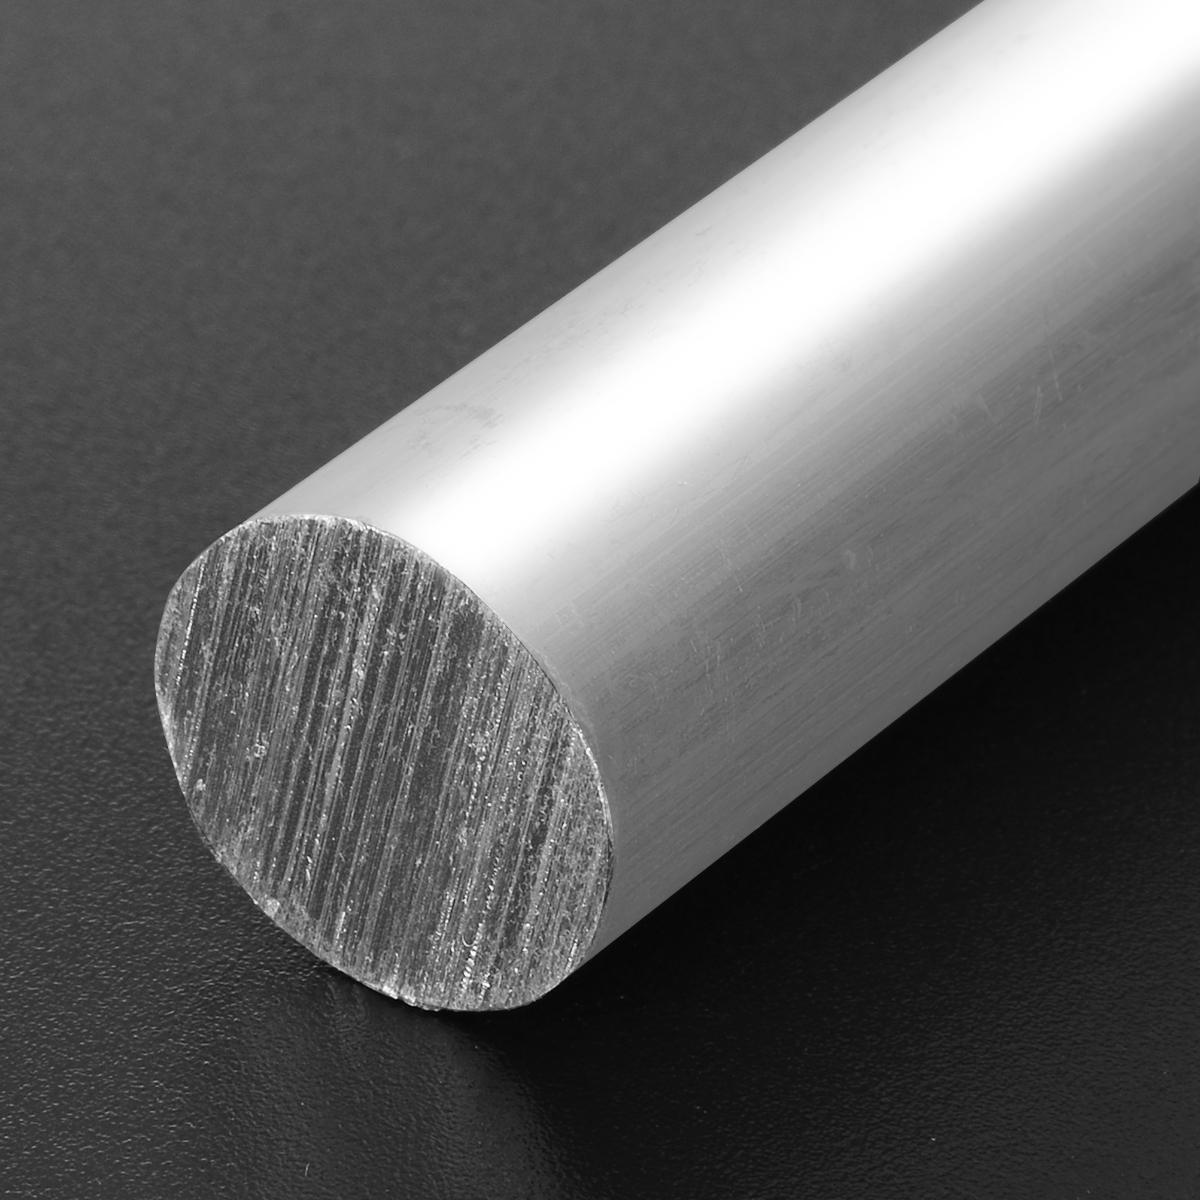 16mm x 9cm Magnesium Rod Bar High Purity 99.99% Aluminum Metal Rod for Welding Soldering Magnesium Bar Survival Emergency Tools